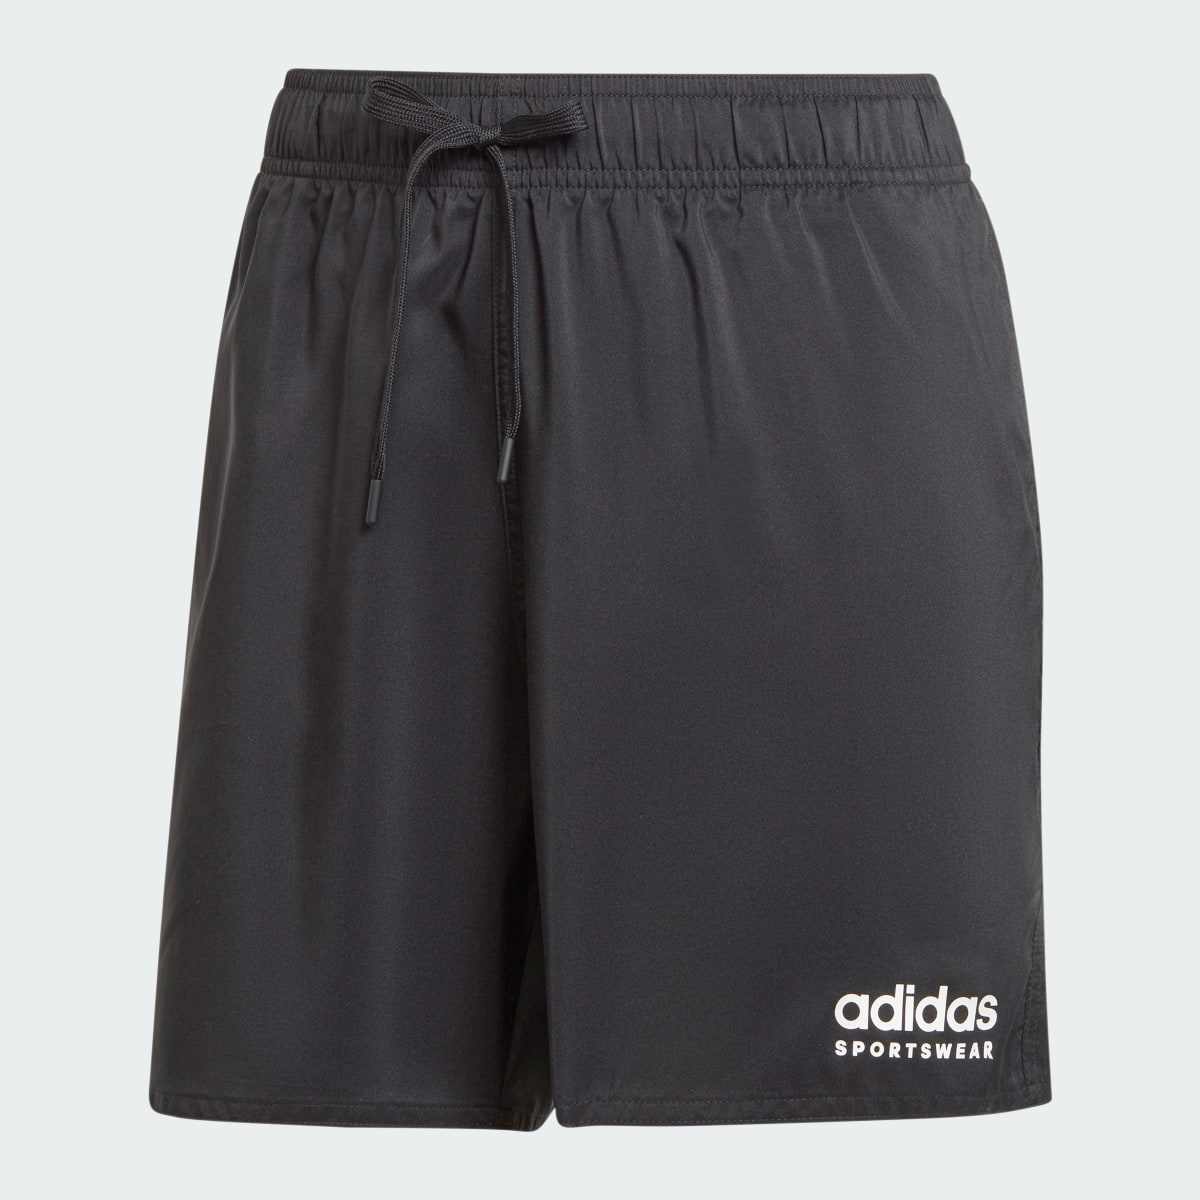 Adidas Branded Beach Shorts. 4